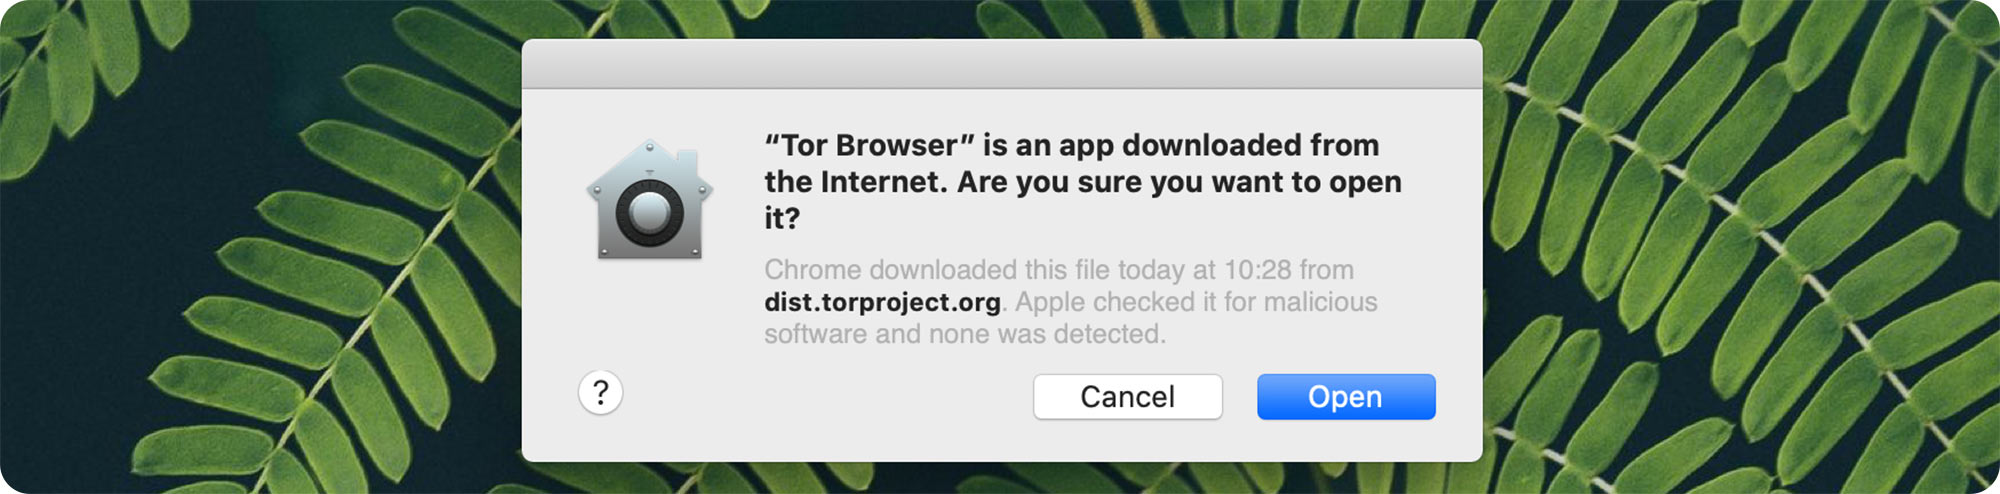 Tor browser on mac вход на гидру конопля многолетнее растение